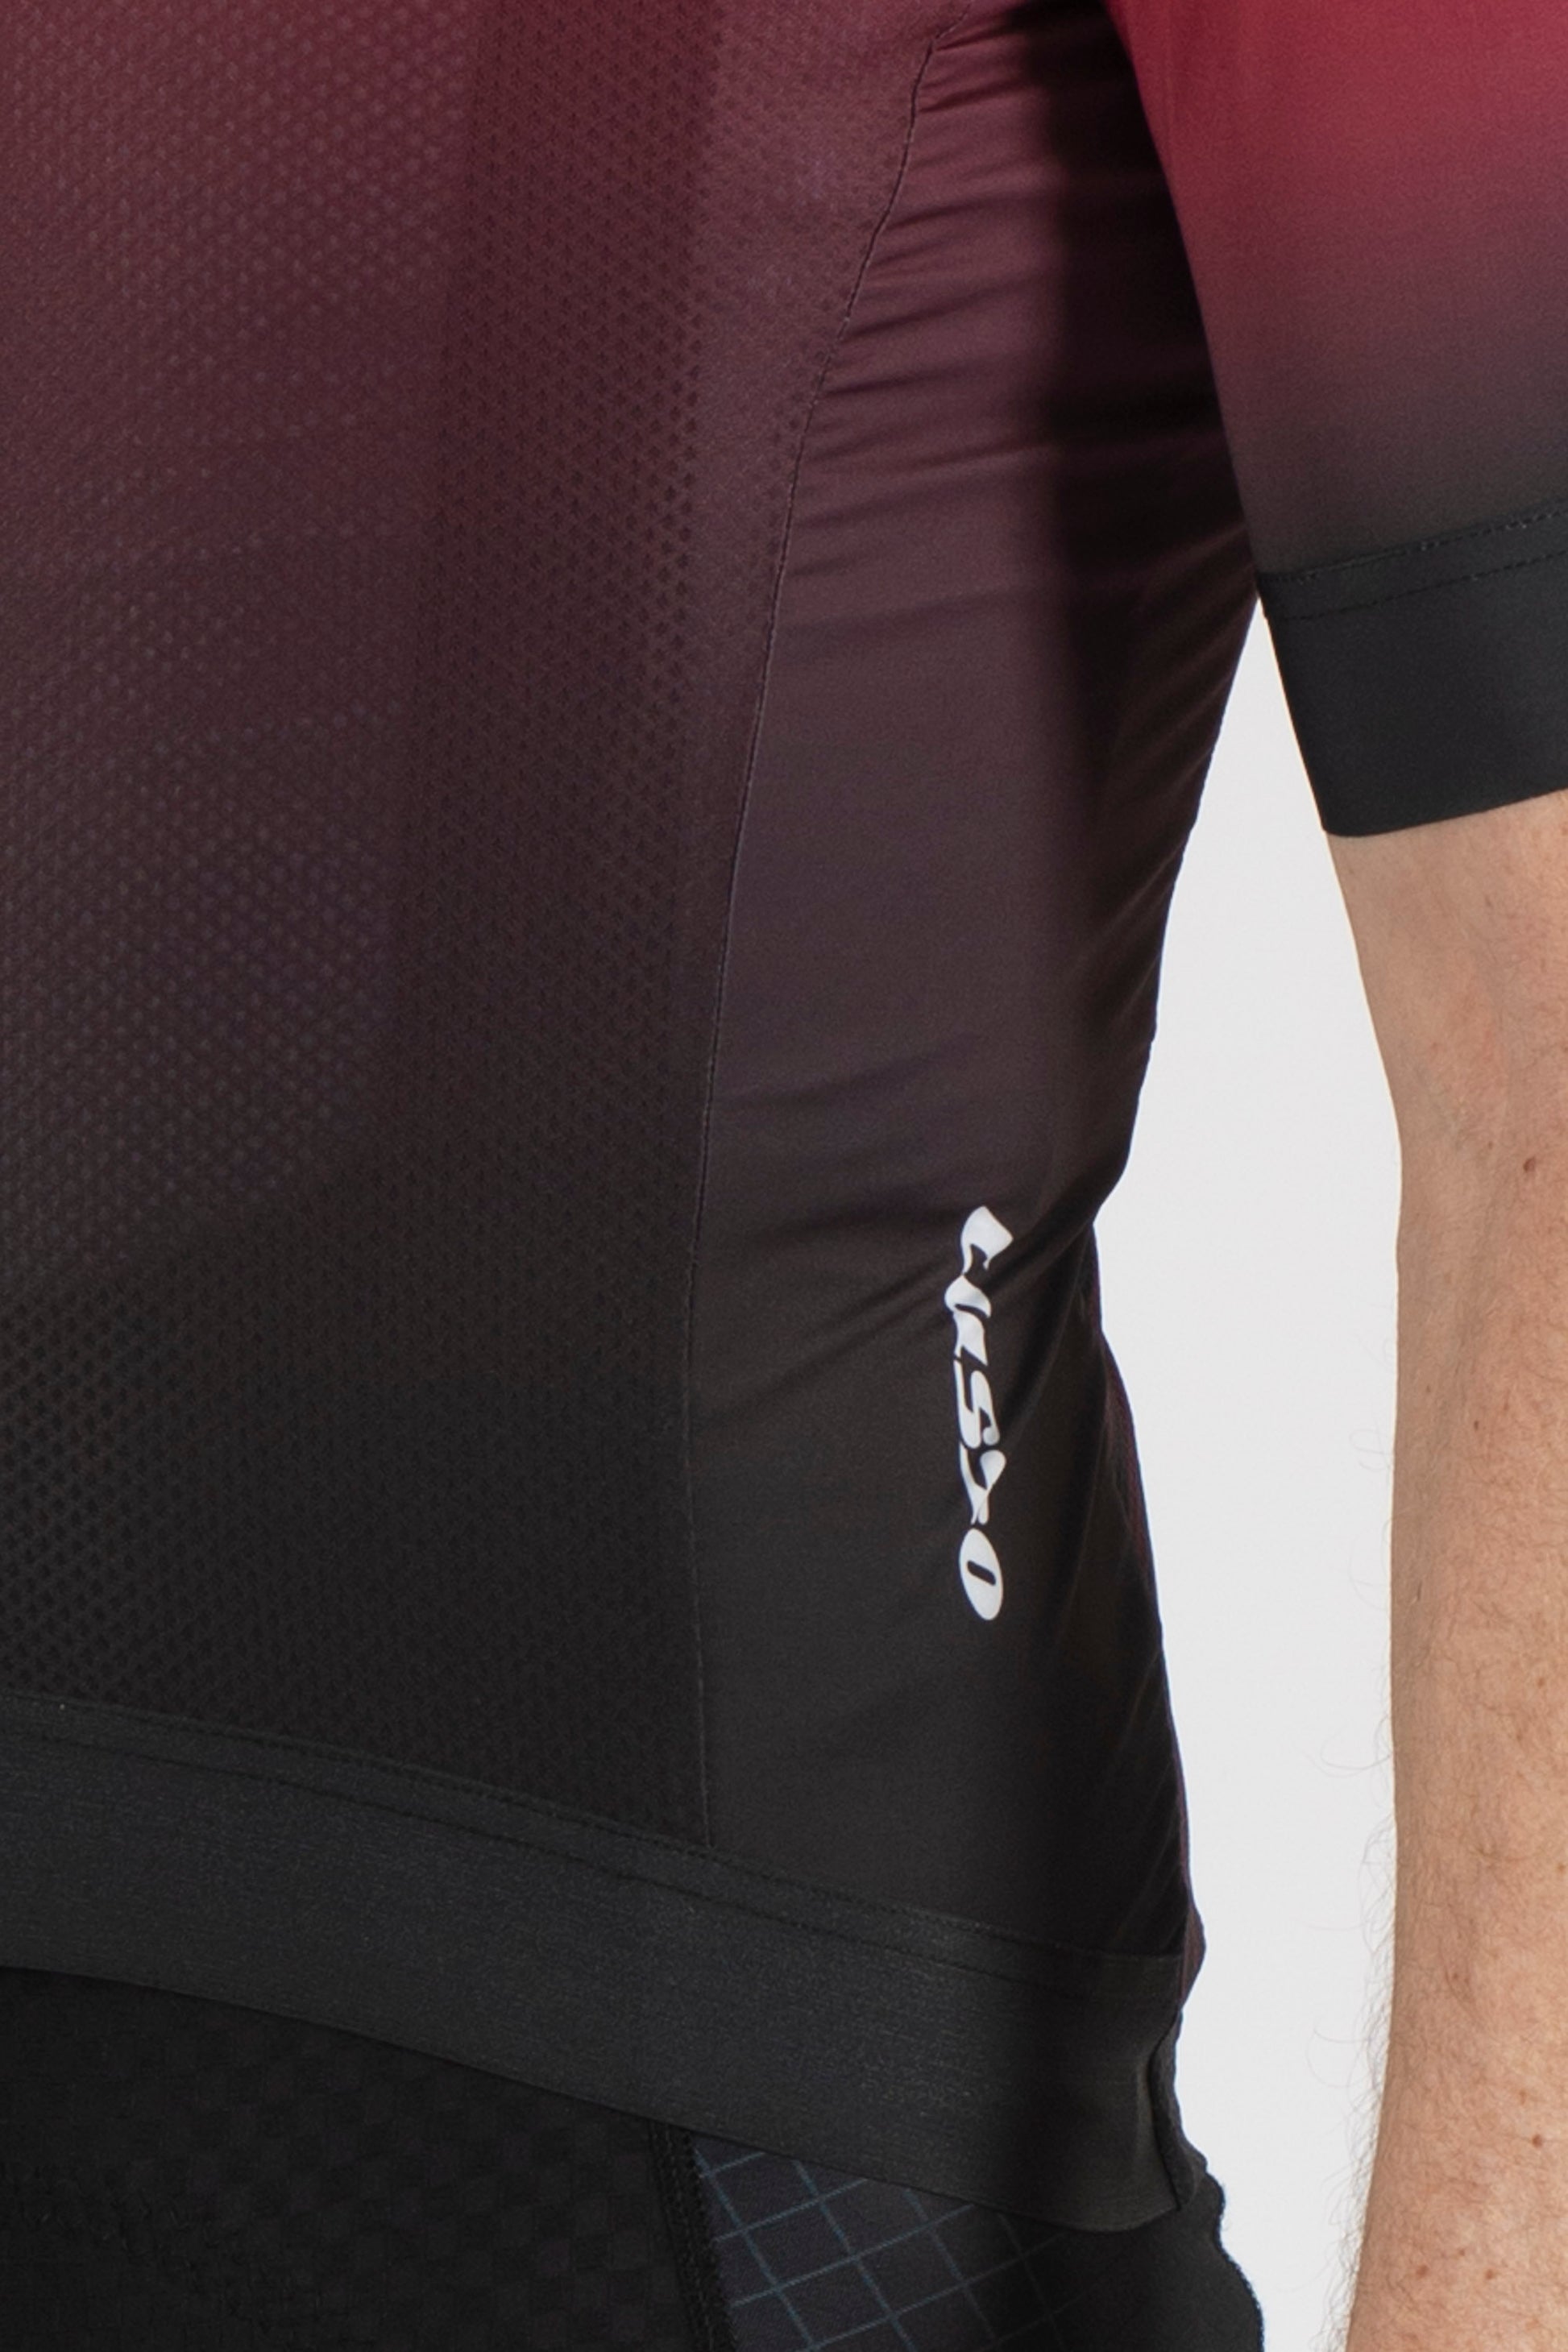 Fade Plum/Black Short Sleeve Jersey - Lusso Cycle Wear